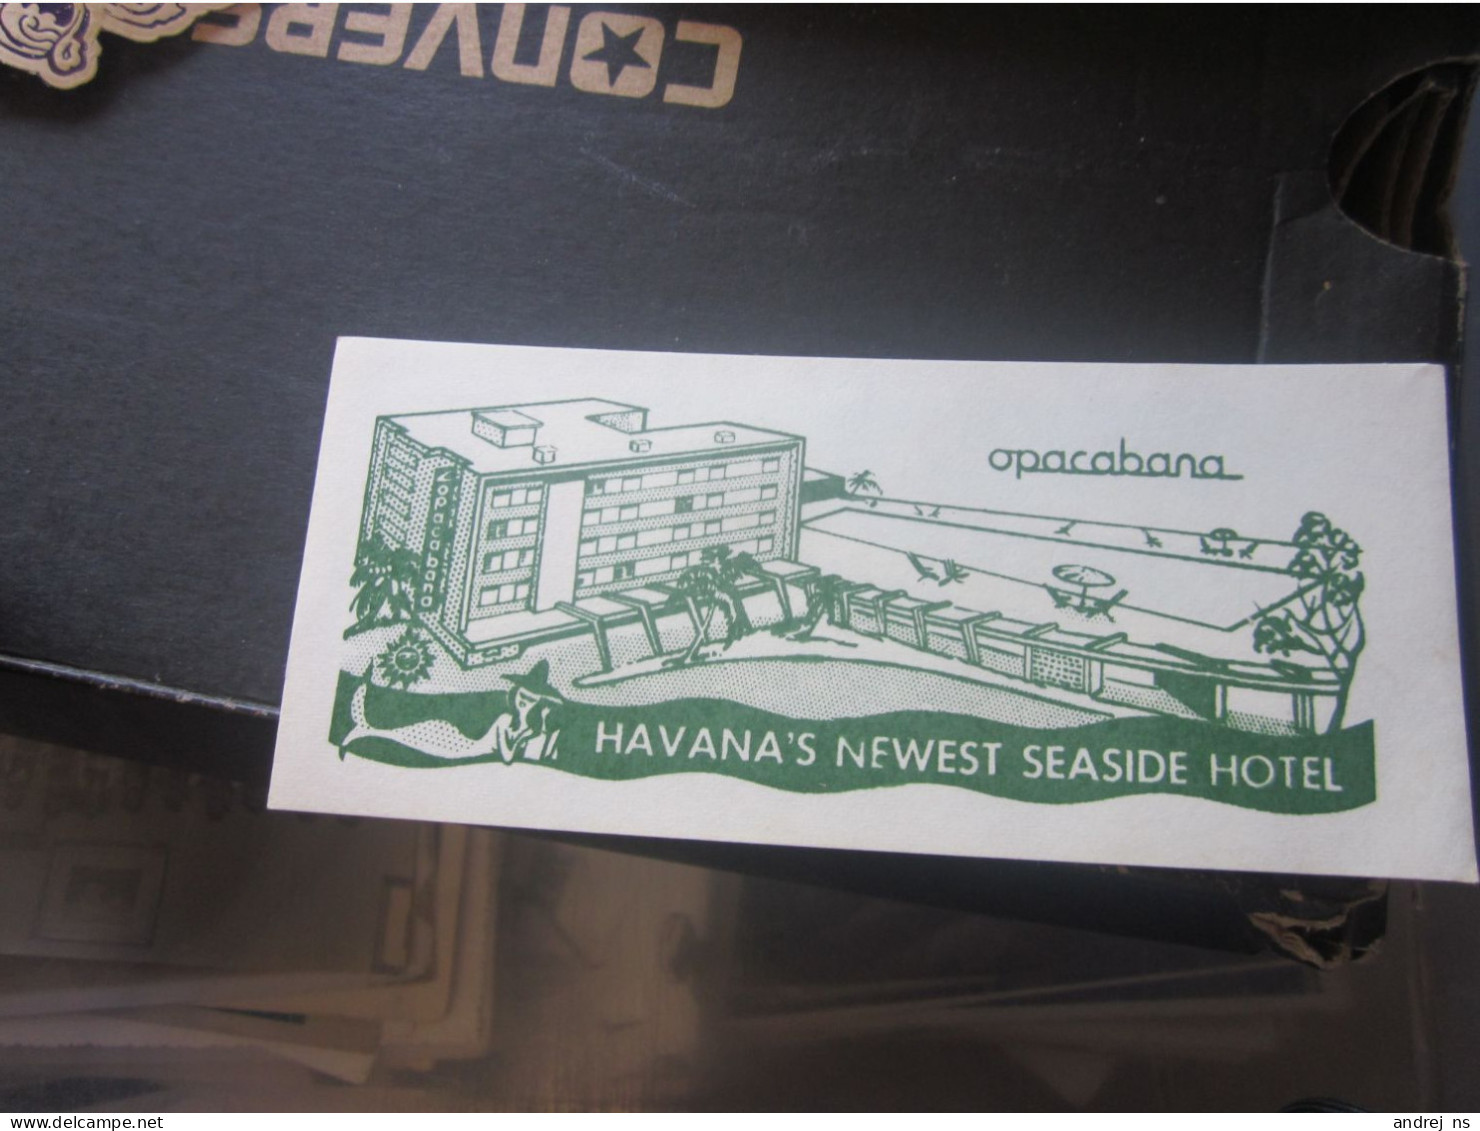 Opacabana Havana S Newst Seaside Hotel - Hotelaufkleber